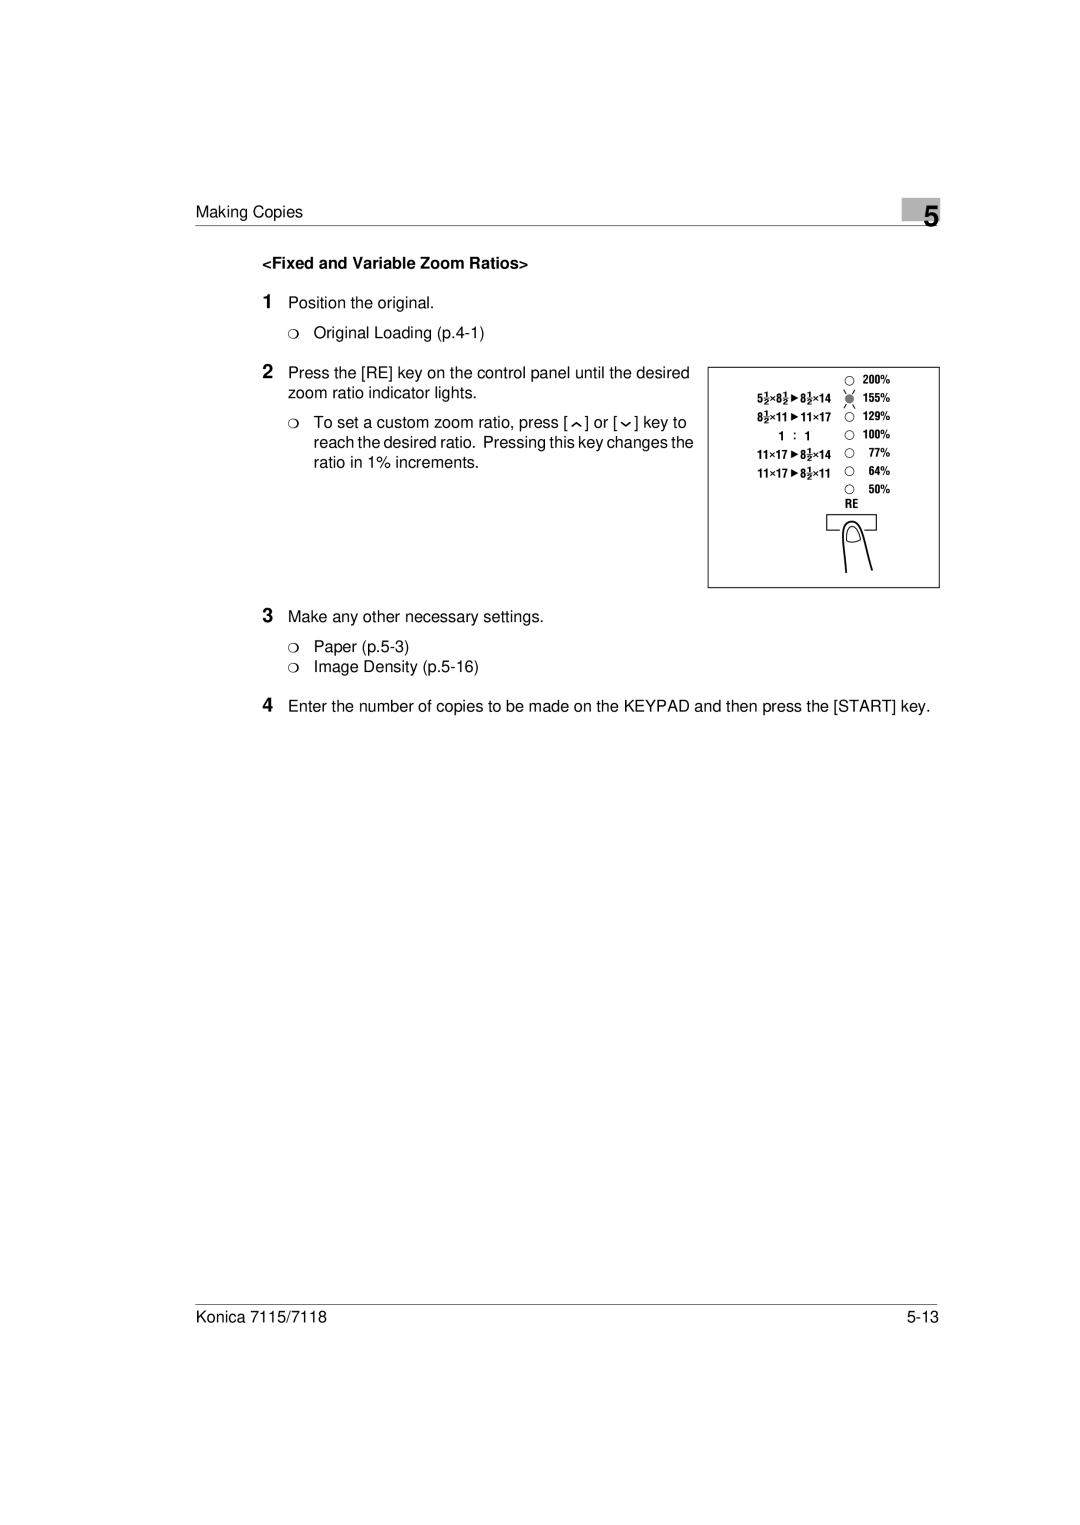 Konica Minolta Printer Copier manual Fixed and Variable Zoom Ratios 